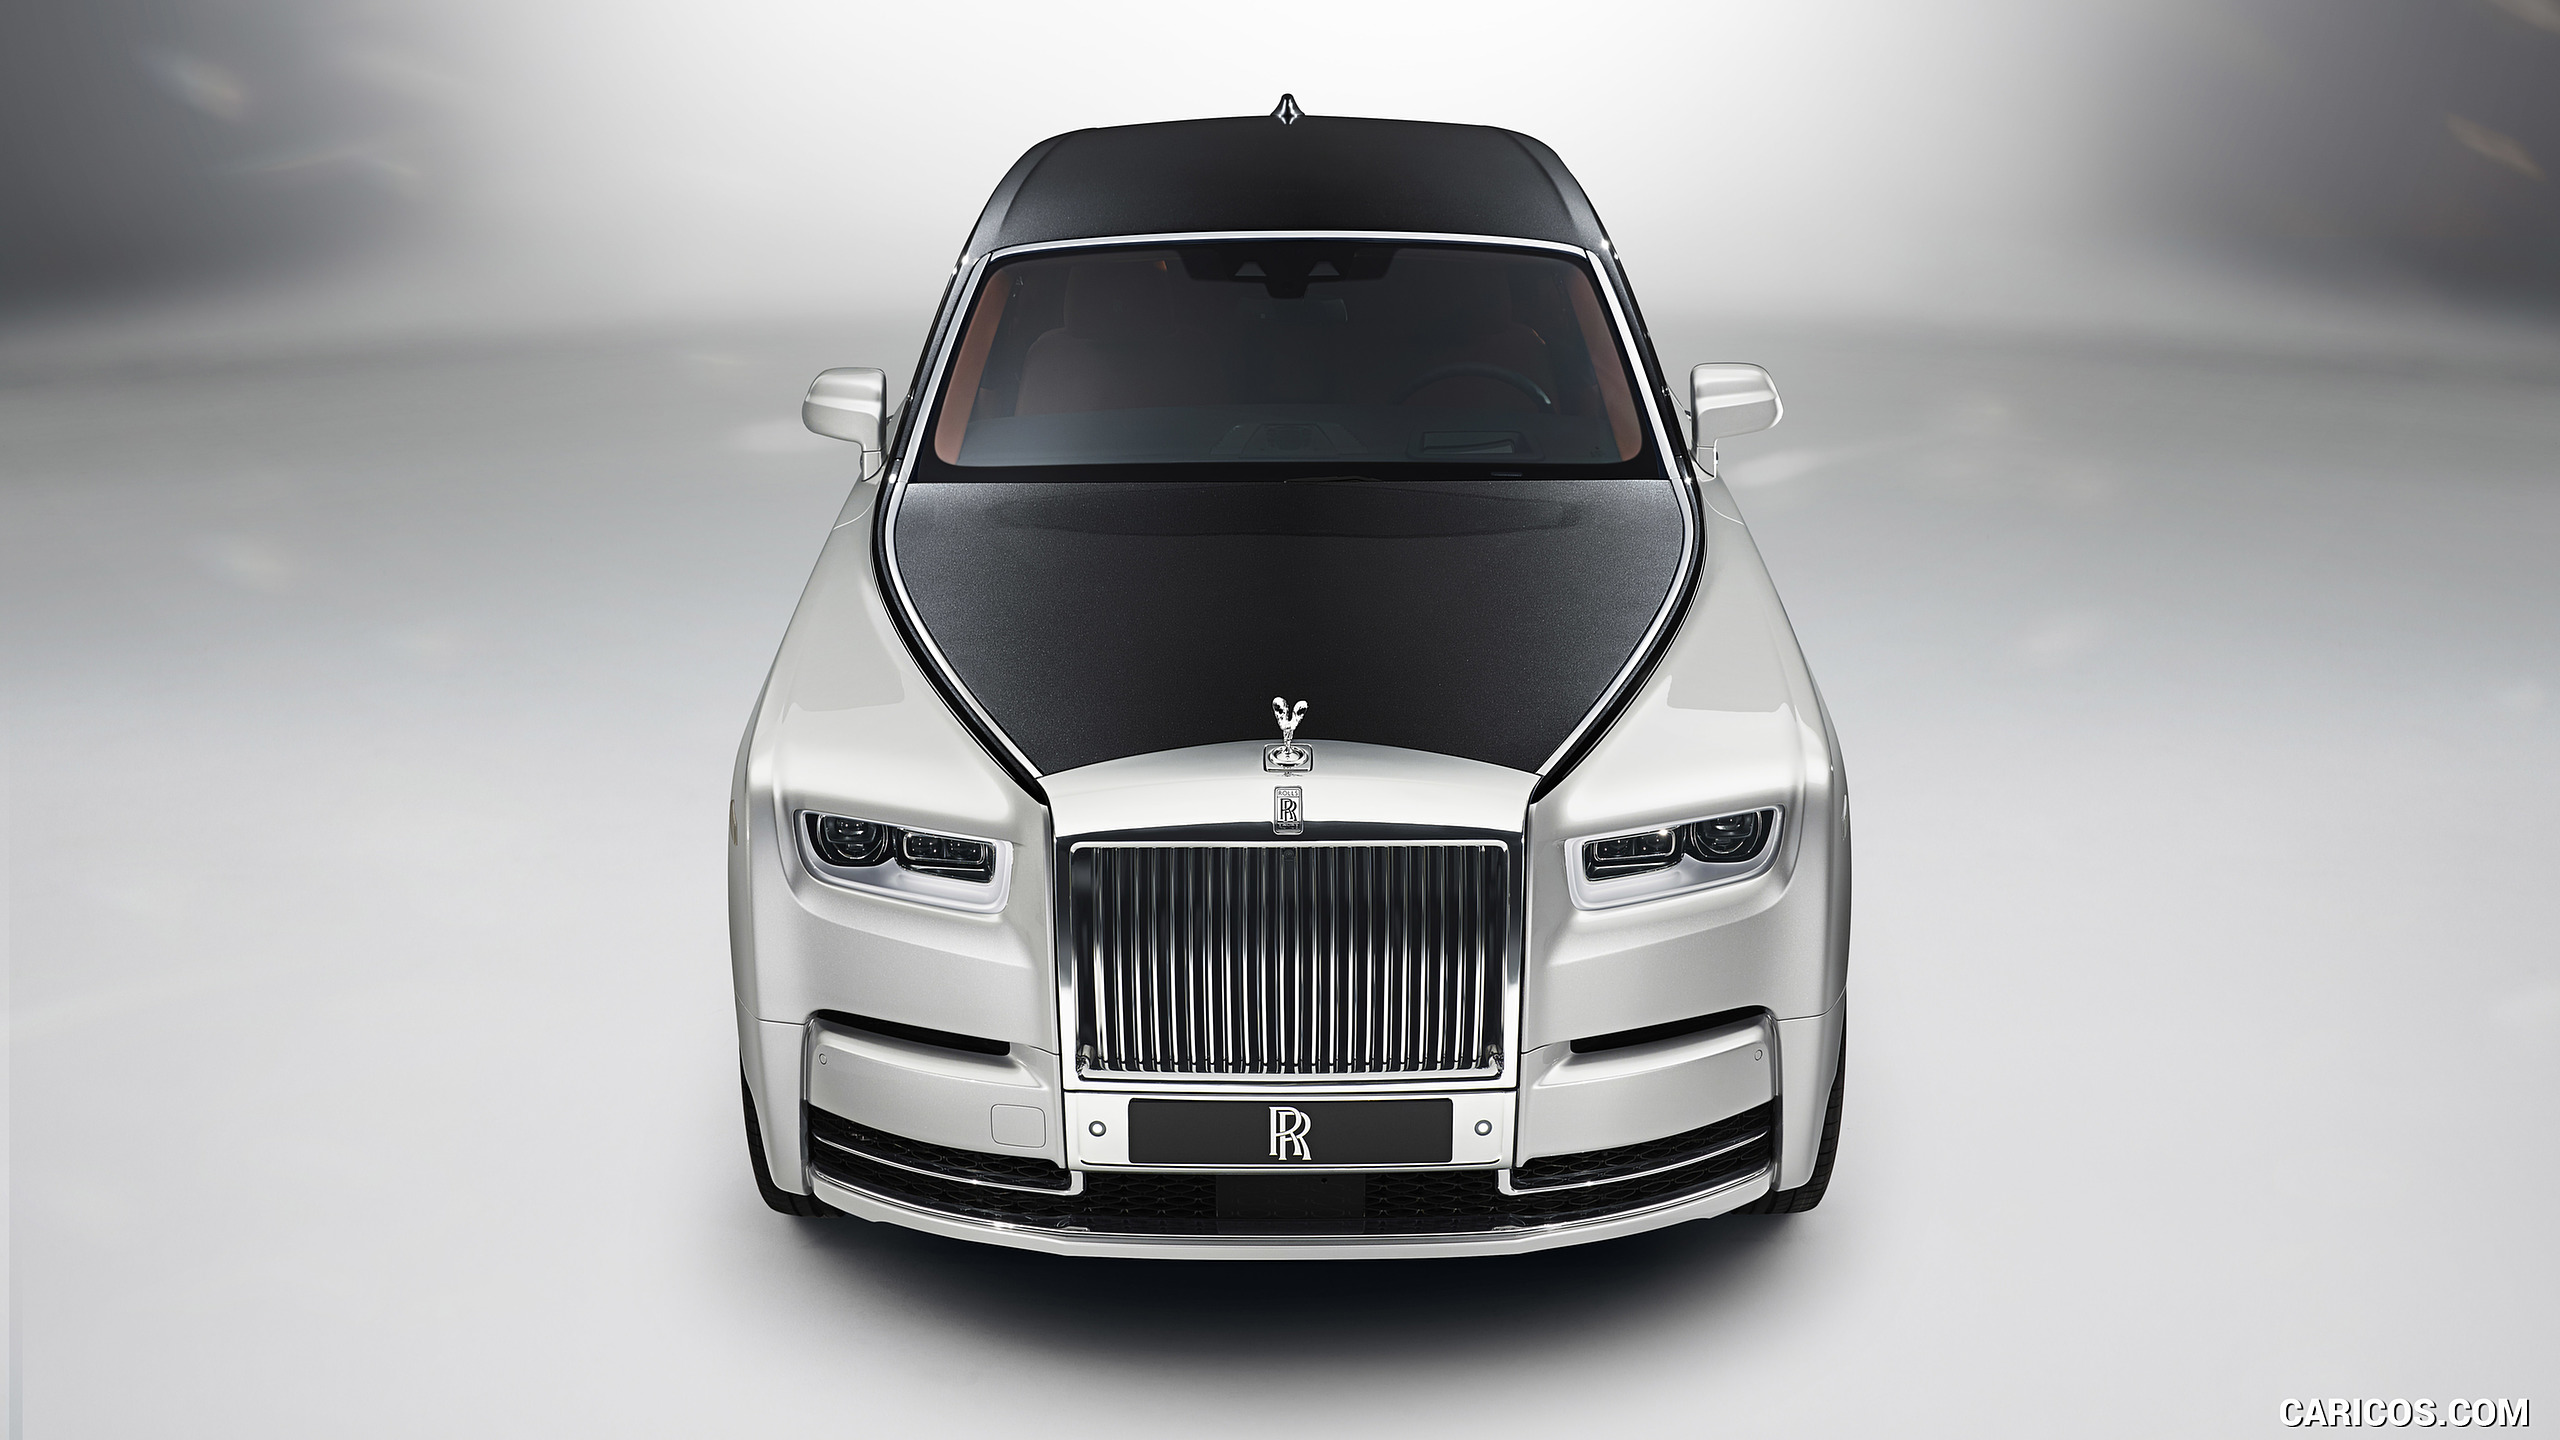 56+] Rolls-Royce Phantom Wallpapers - WallpaperSafari